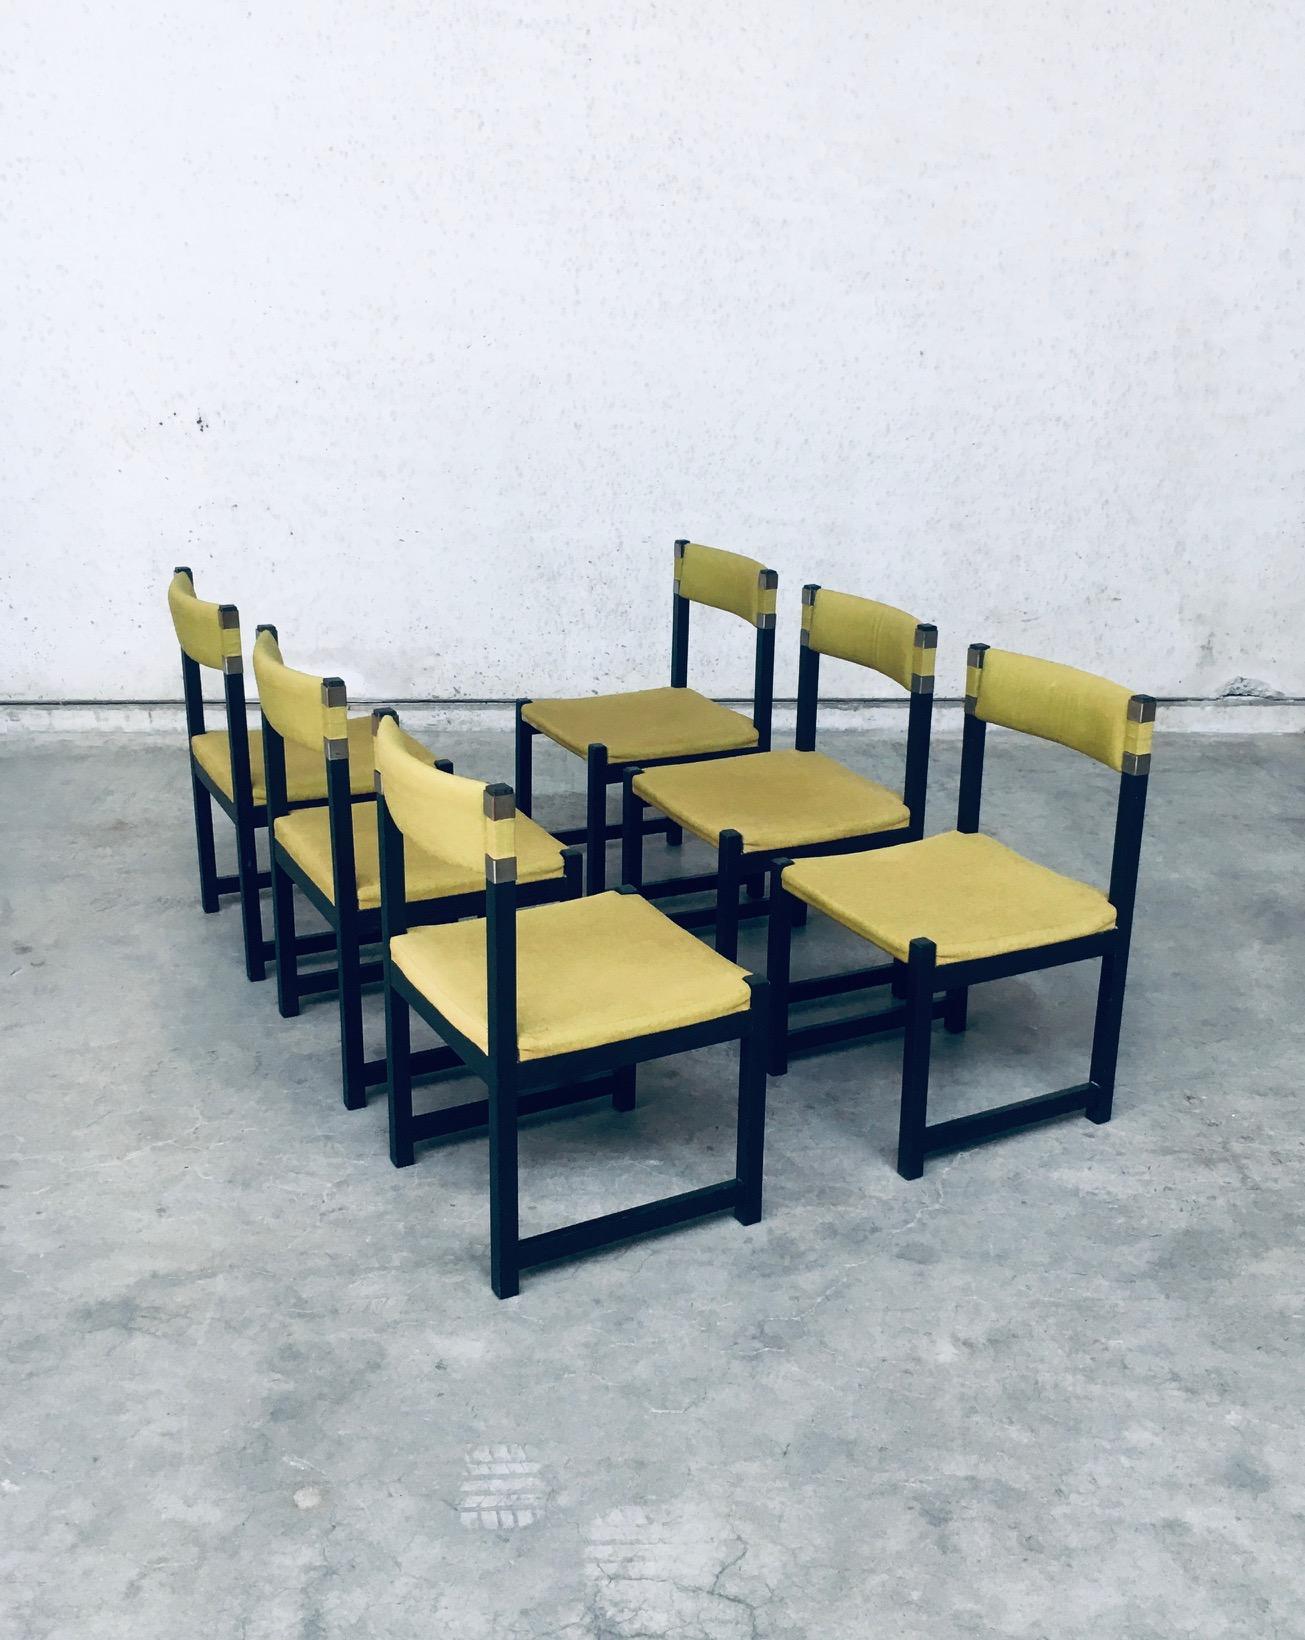 Mid-20th Century Midcentury Modern Design Dining Chair set by J. Batenburg for MI, Belgium 1969 For Sale